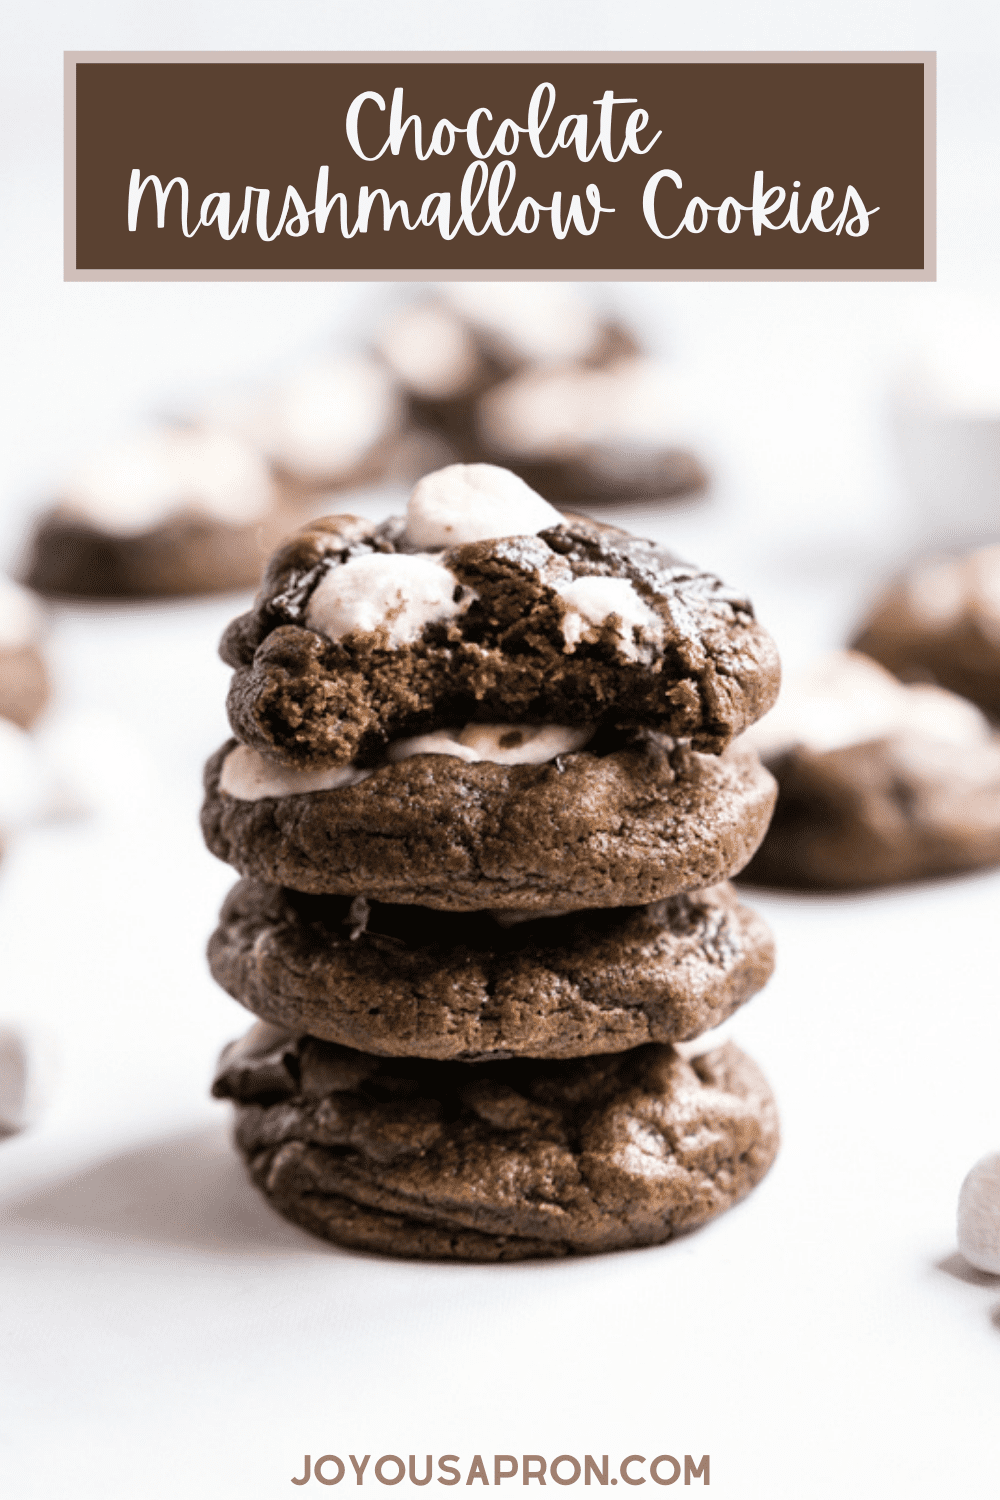 Chocolate Marshmallow Cookies - Gooey, soft and thick chocolate cookies filled with melted chocolate chunks and mini marshmallows. Perfect sweet treat for the holiday season. via @joyousapron